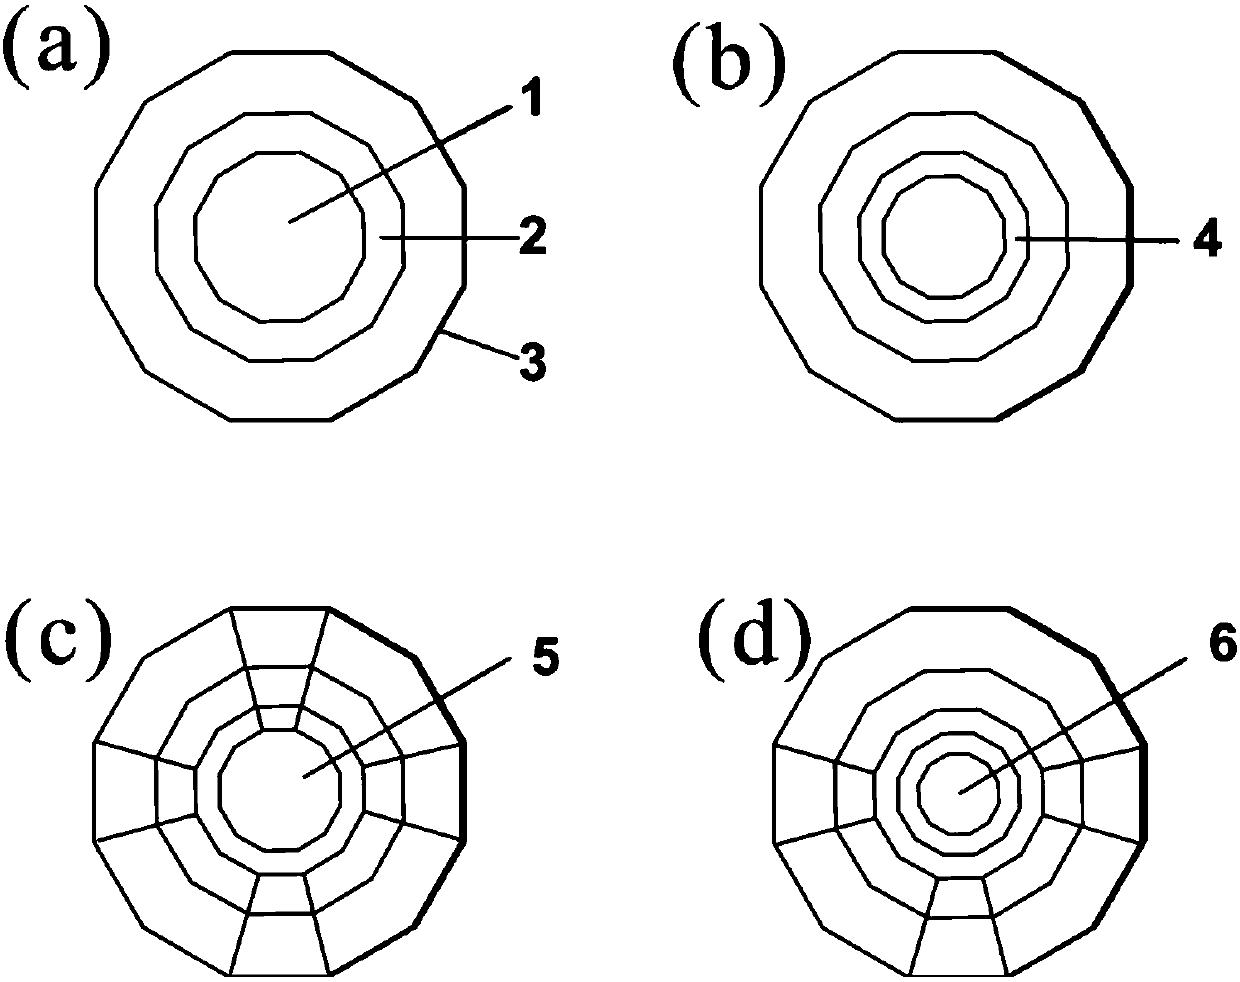 Method for in-situ measurement of material thermoelectric properties in diamond anvil cell